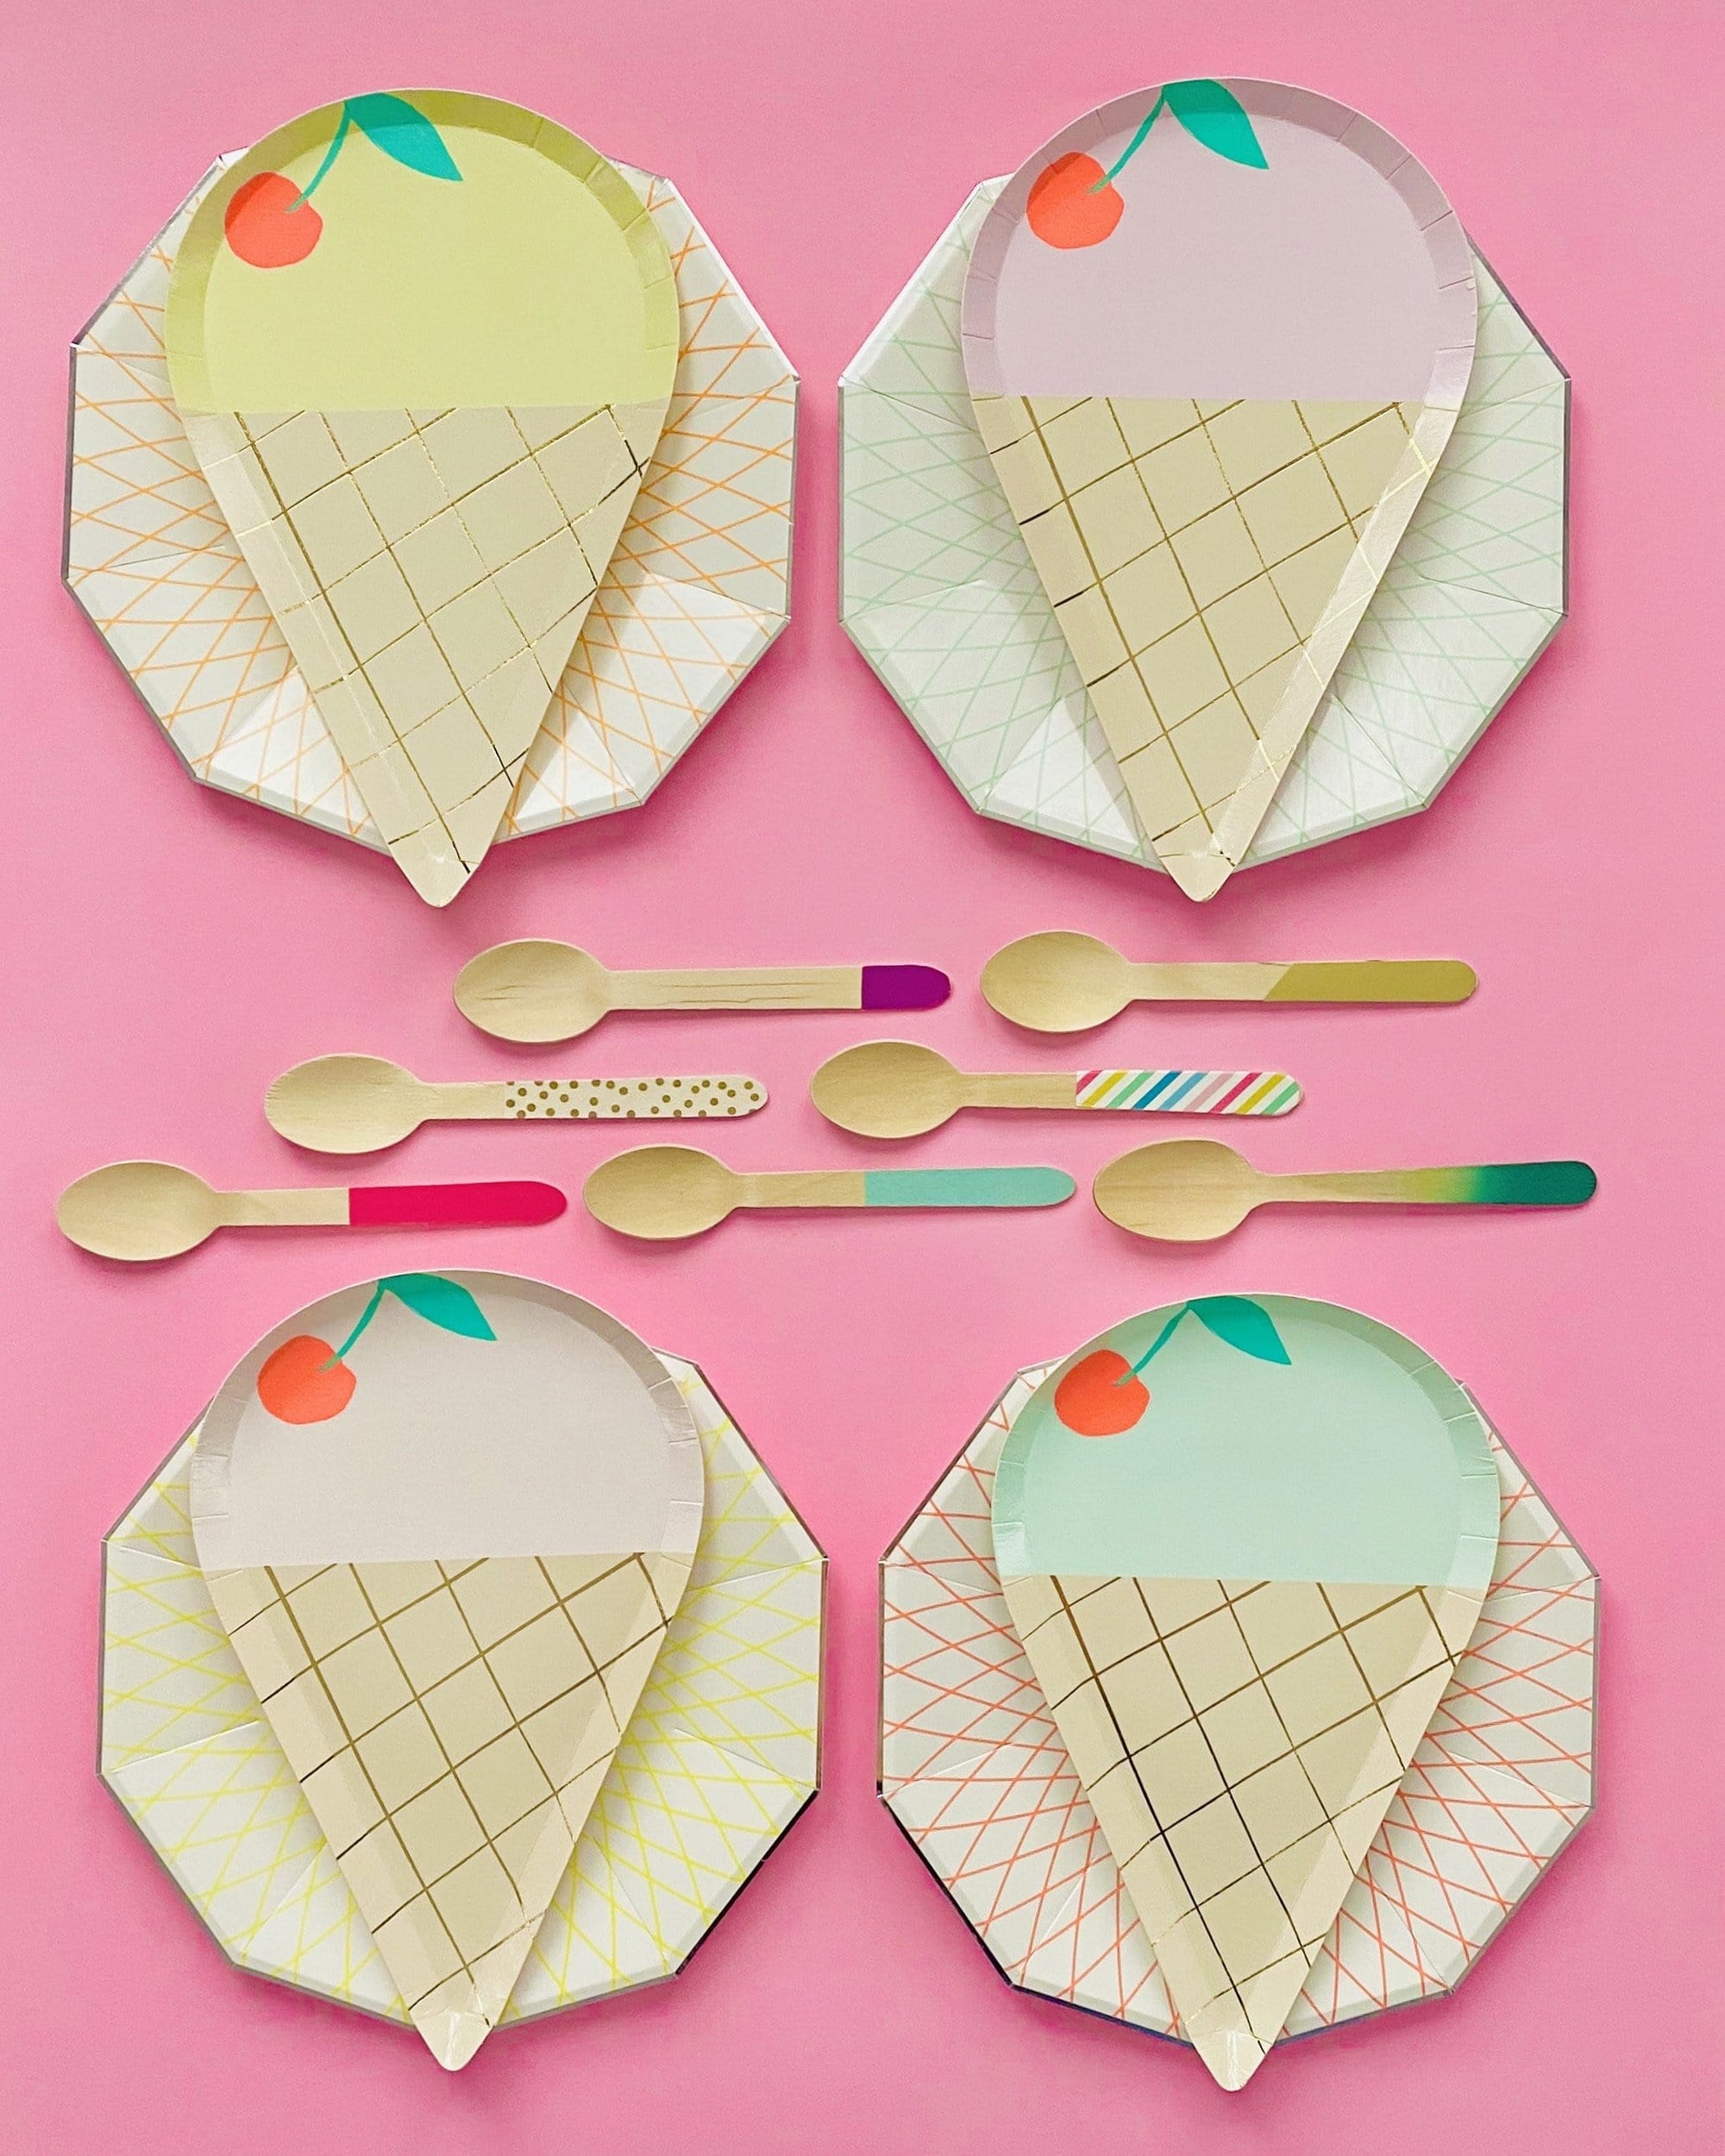 Ice Cream Plates